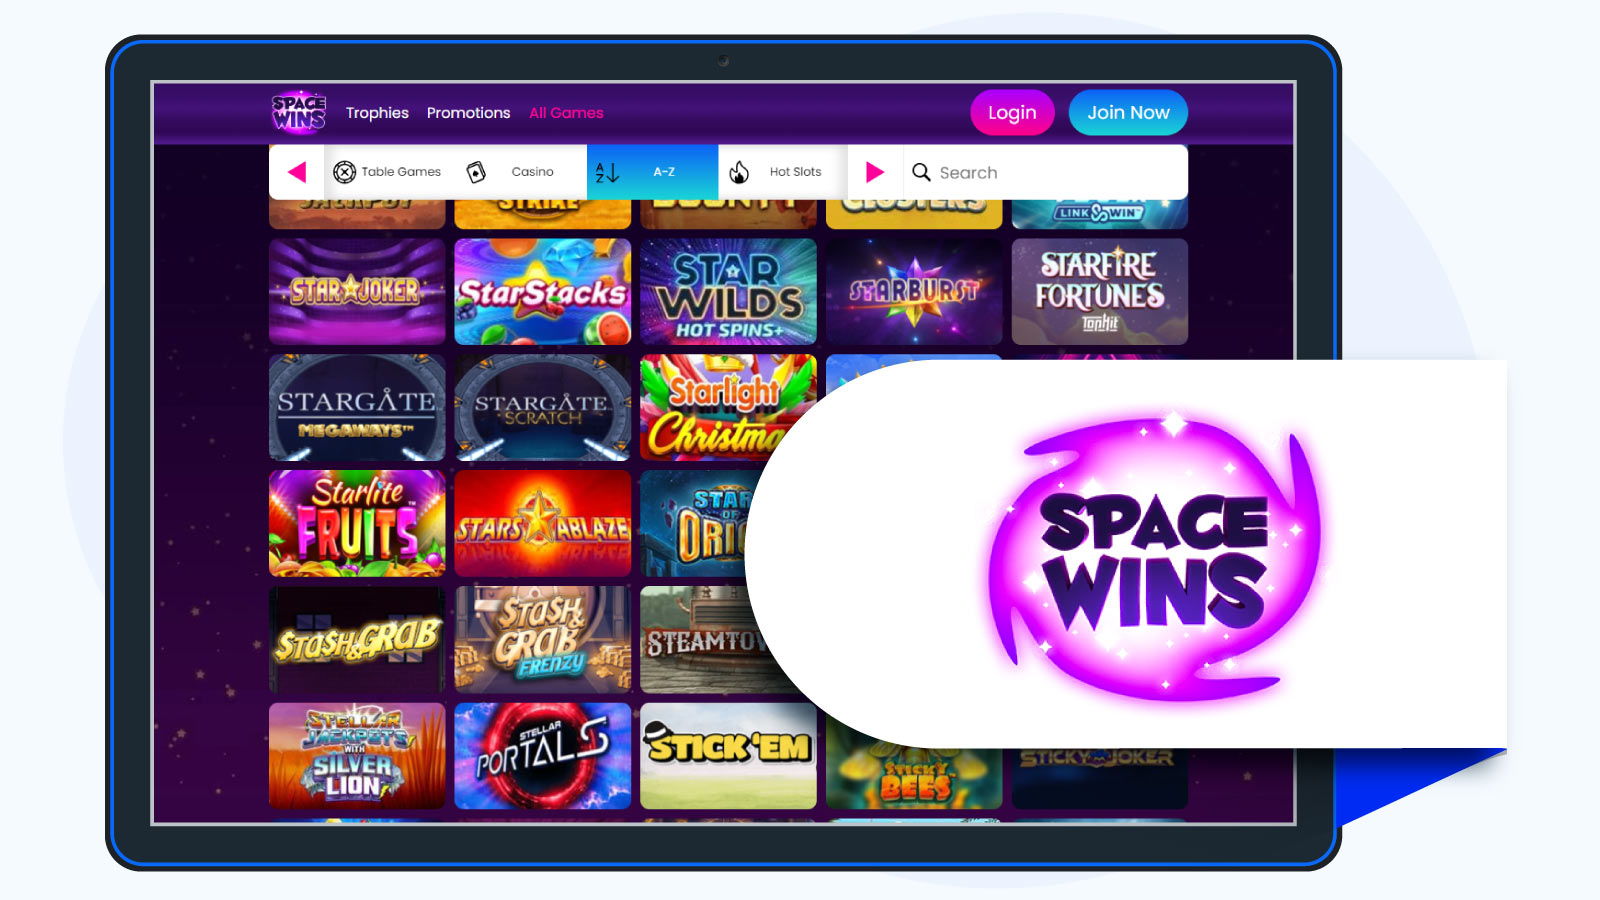 Space Wins casino lobby